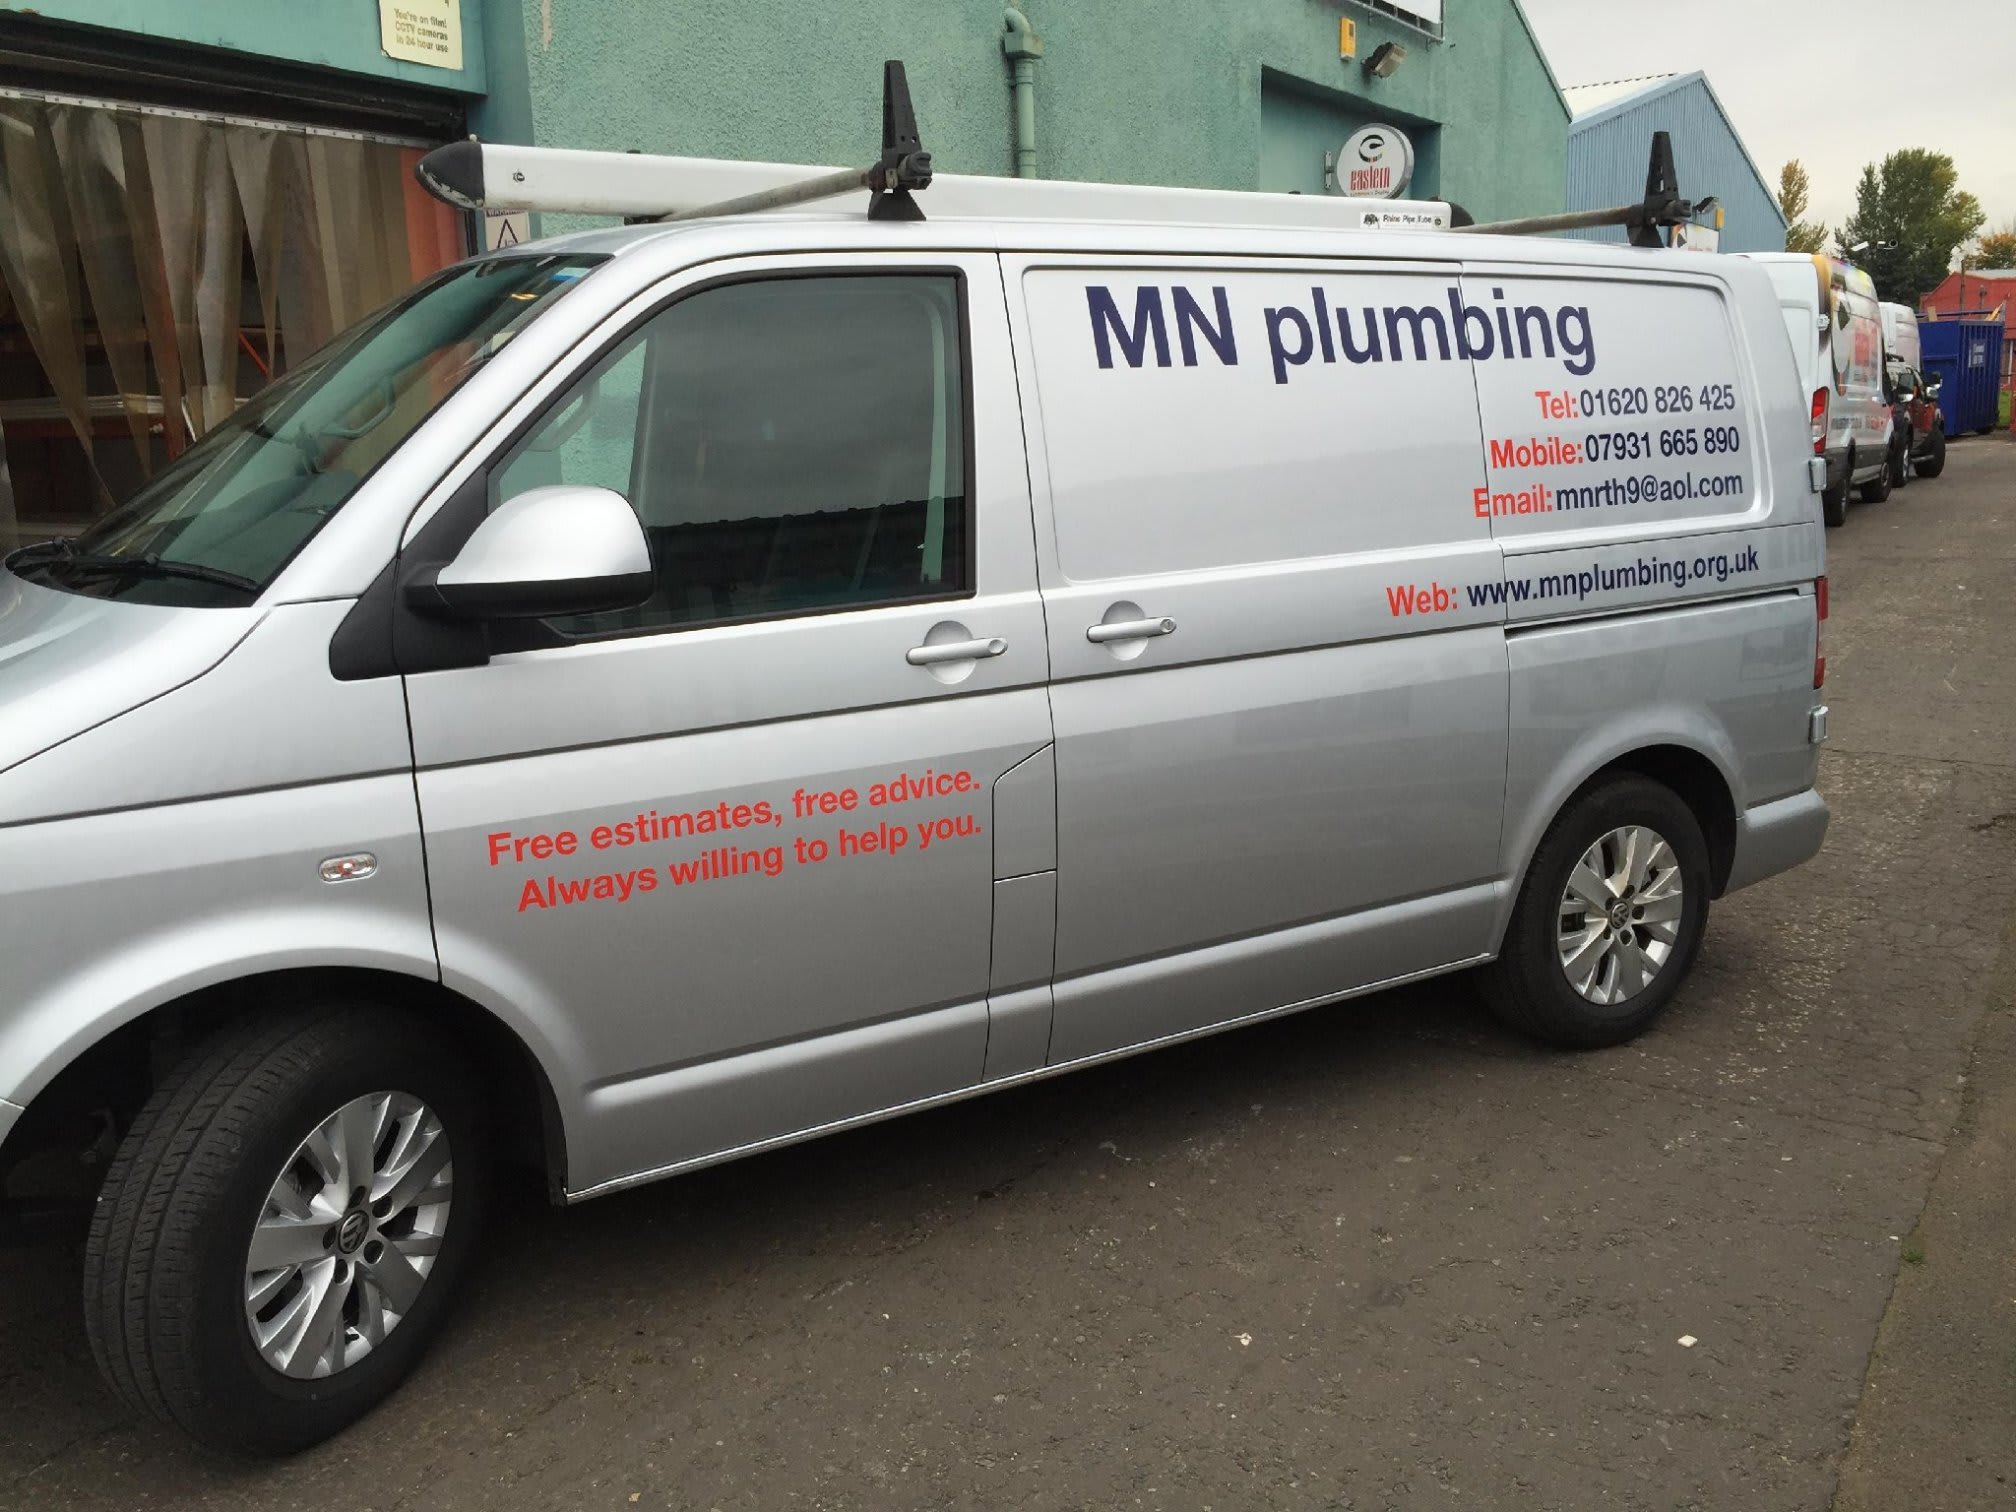 Images M&N Plumbing & Heating Ltd